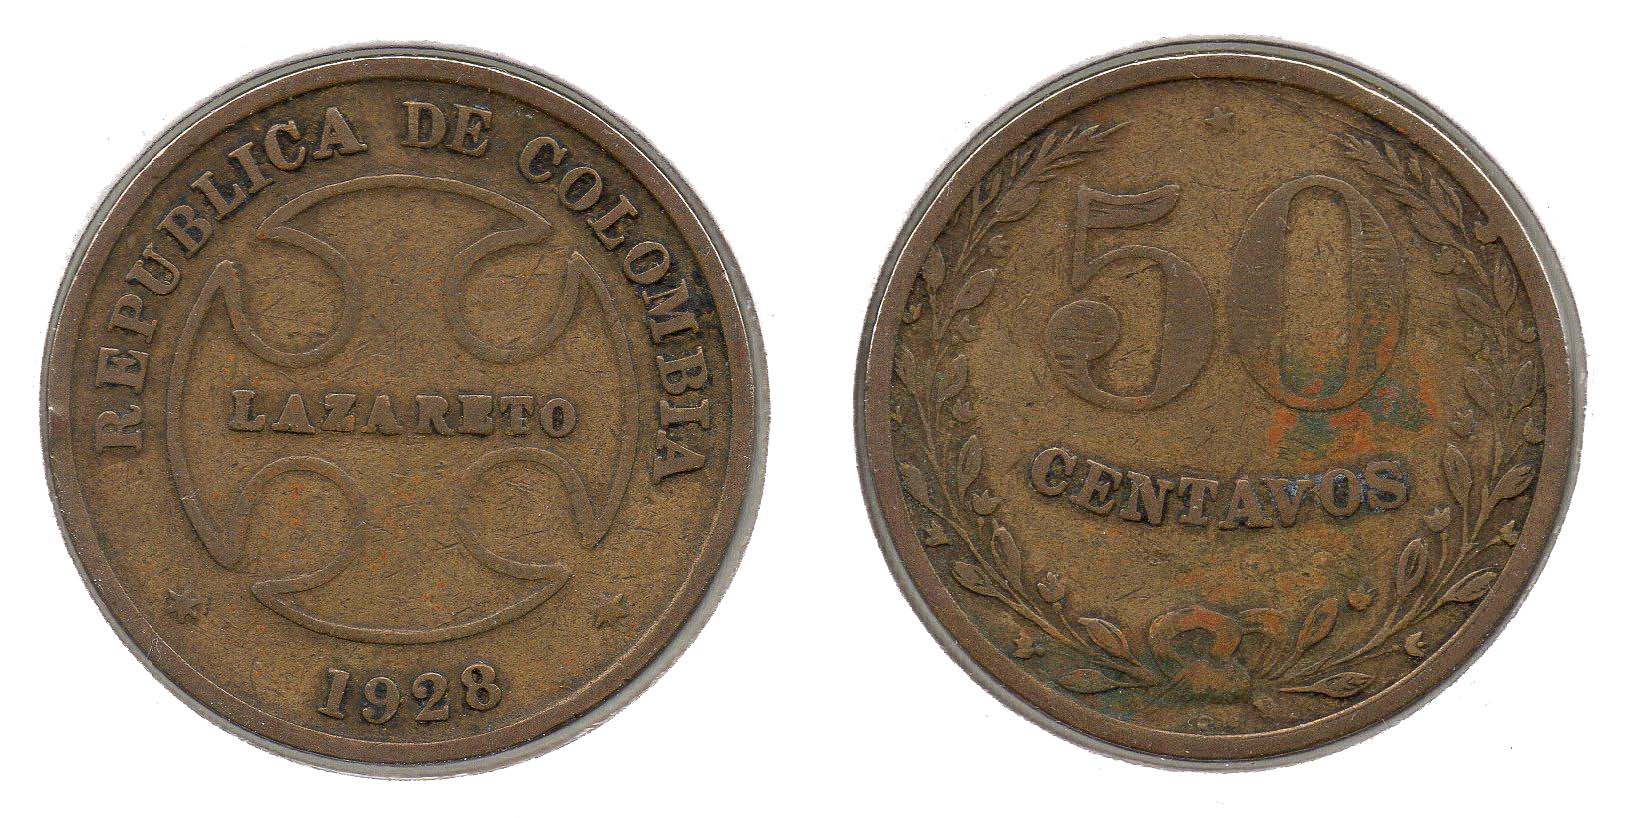 Colombia - 50 Centavos - 1928 - Leprosarium Coinage.jpg